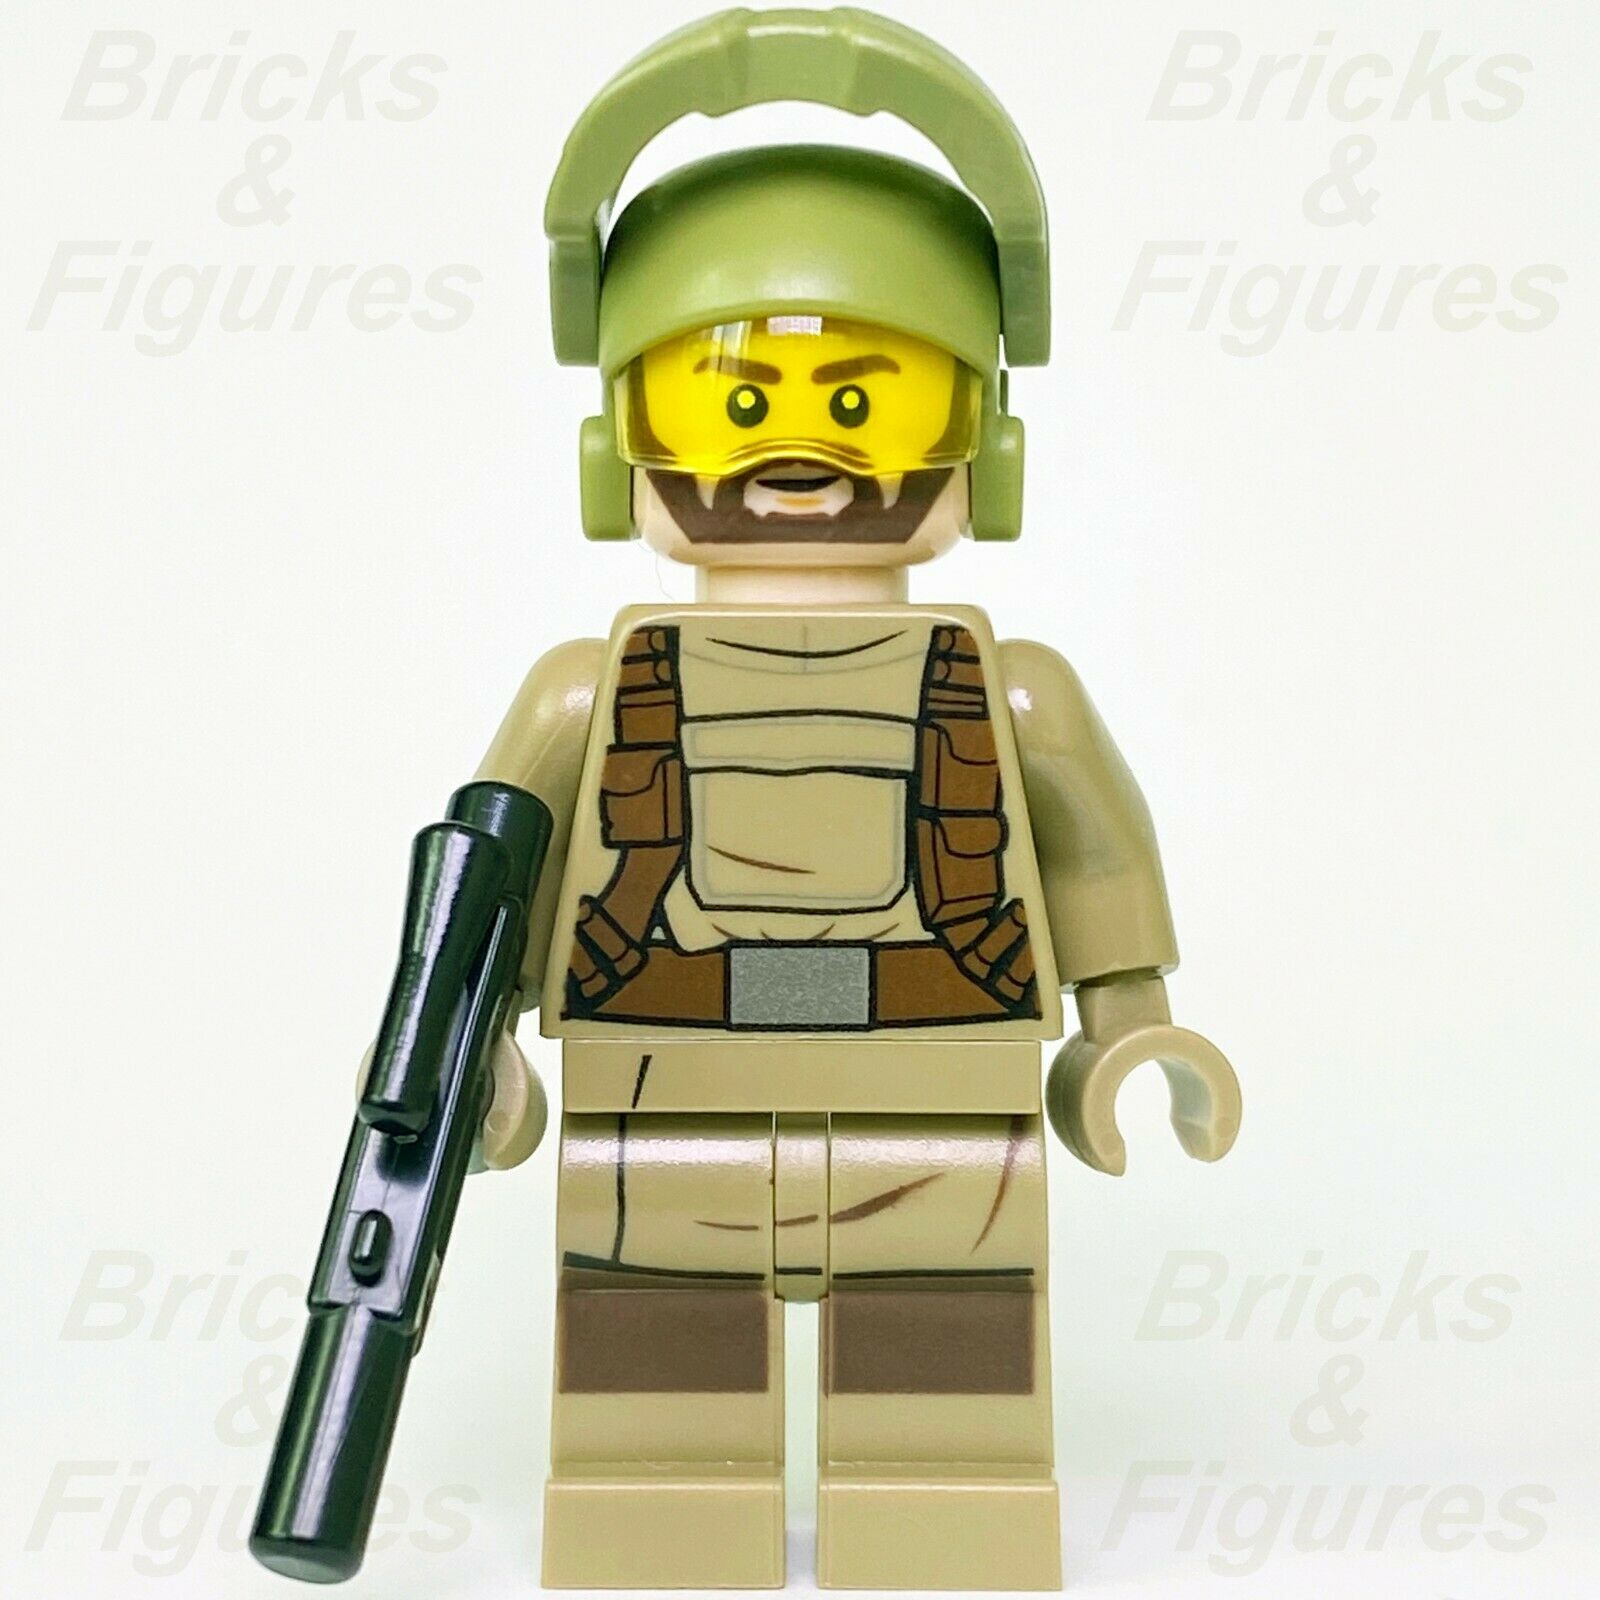 New Star Wars LEGO Resistance Trooper with Beard The Last Jedi Minifigure 75189 - Bricks & Figures